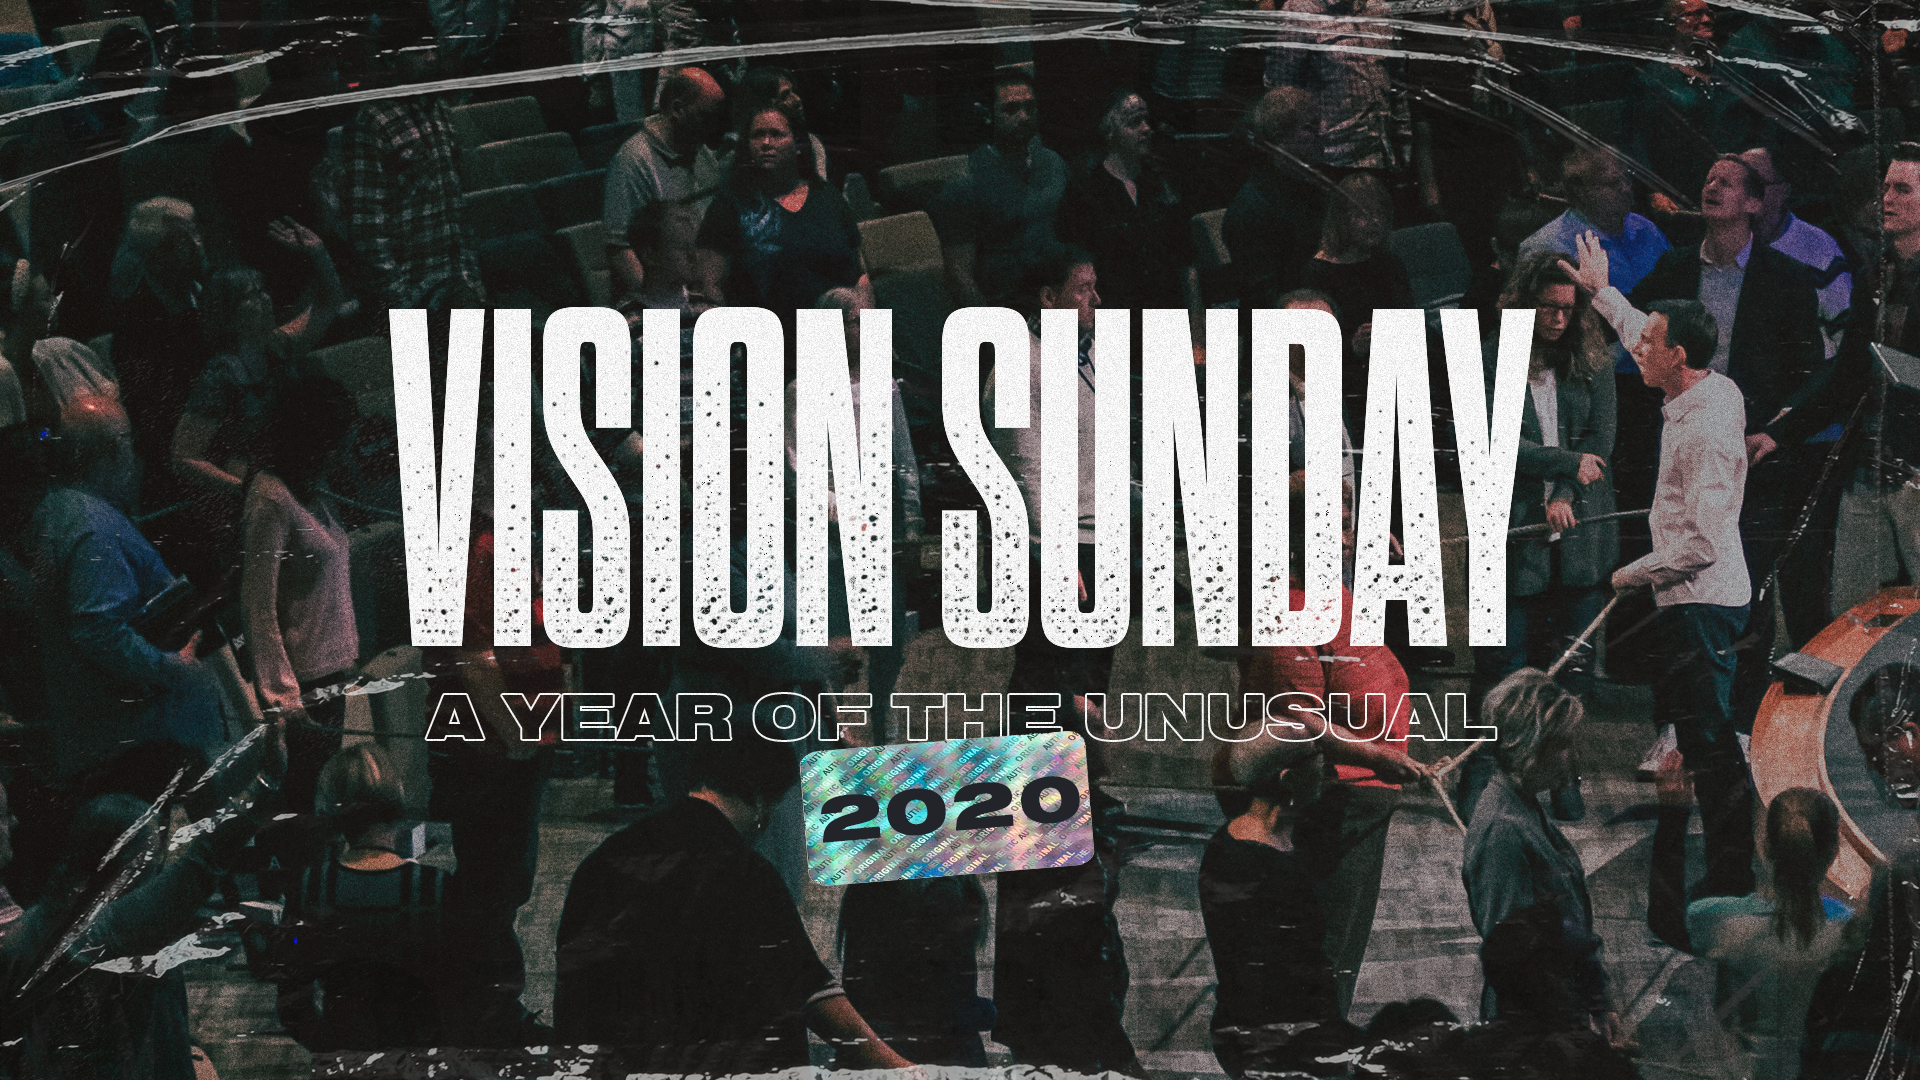 Vision Sunday 2020